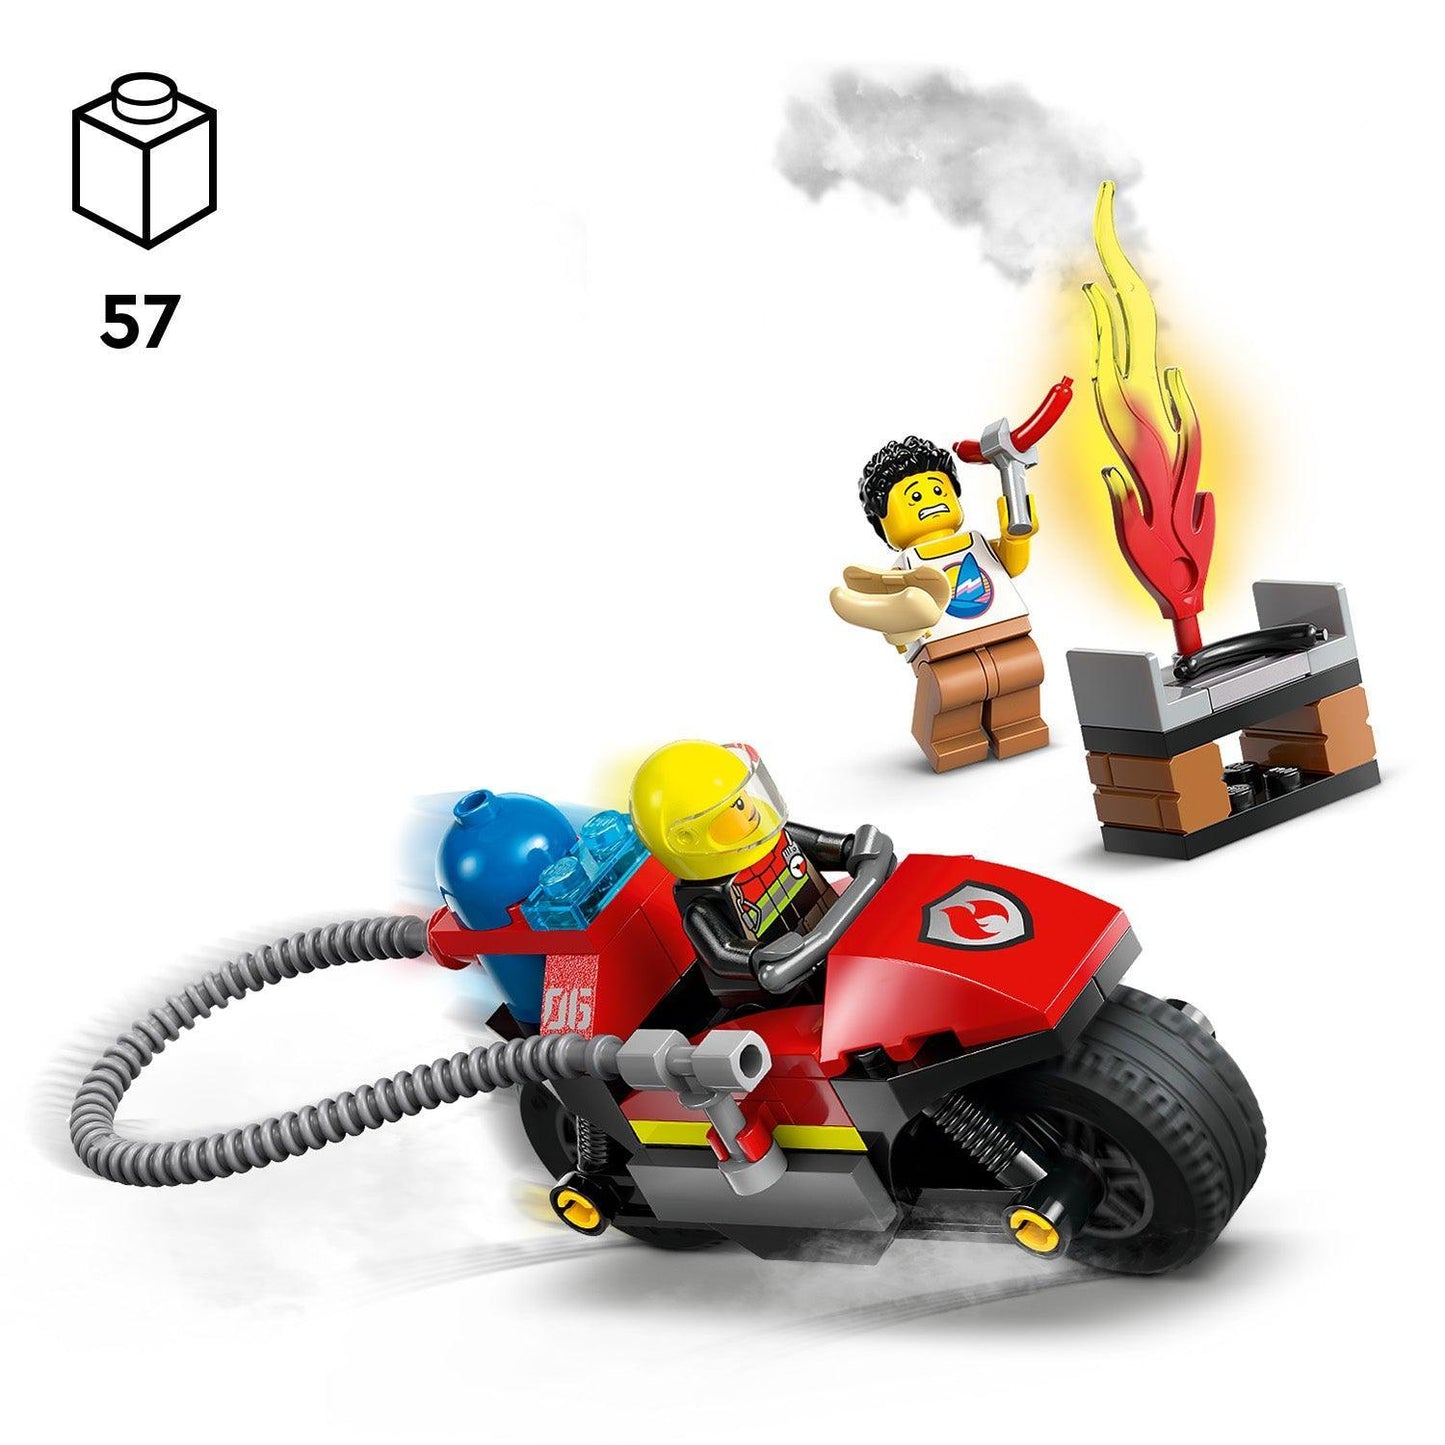 LEGO Fire rescue Motorcycle 60410 City LEGO CITY @ 2TTOYS LEGO €. 9.99